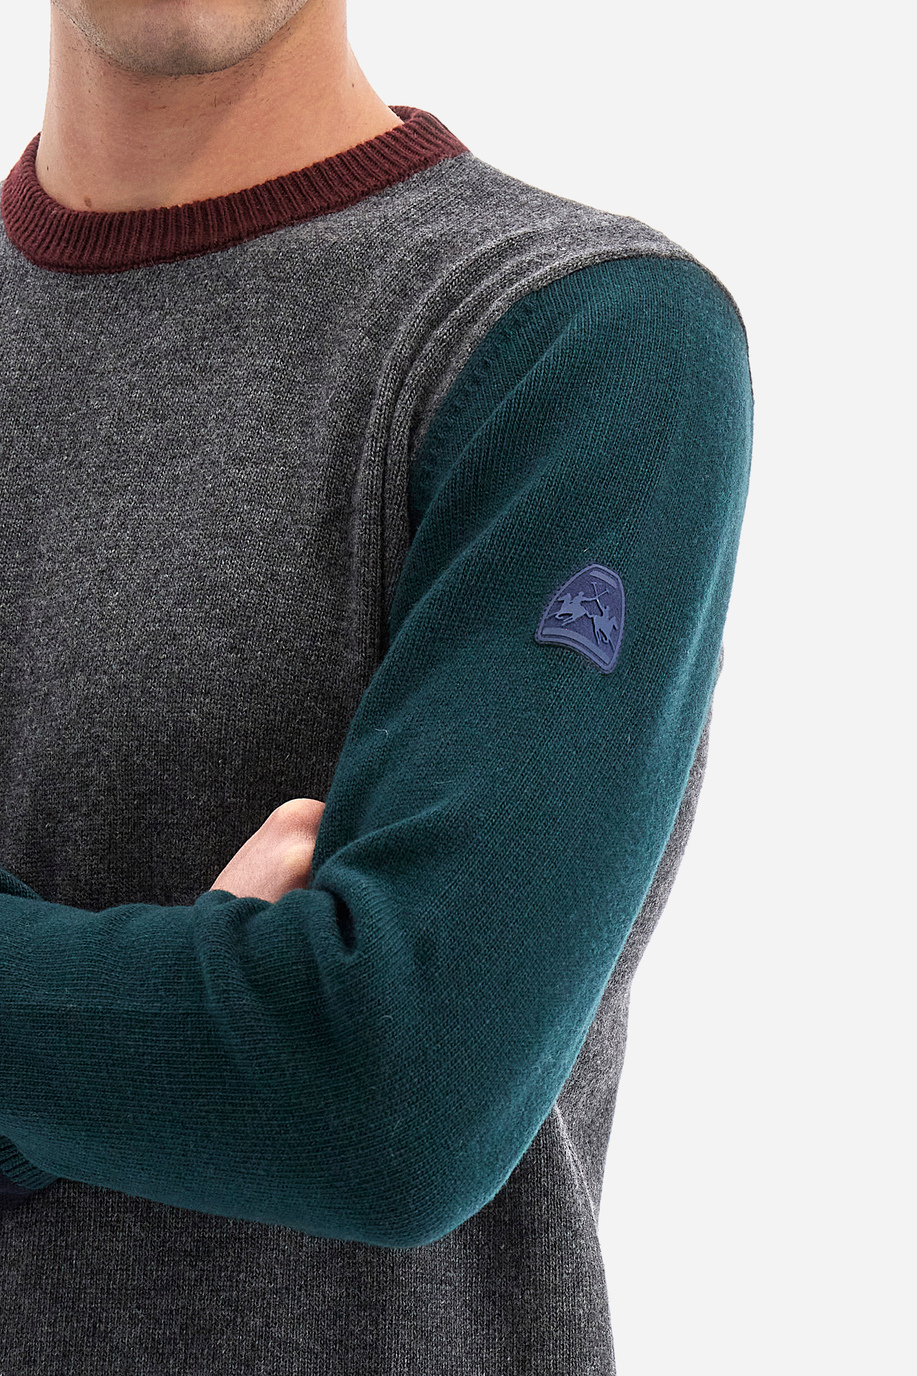 Pull homme coupe classique - Wernhar - Knitwear & Sweatshirts | La Martina - Official Online Shop